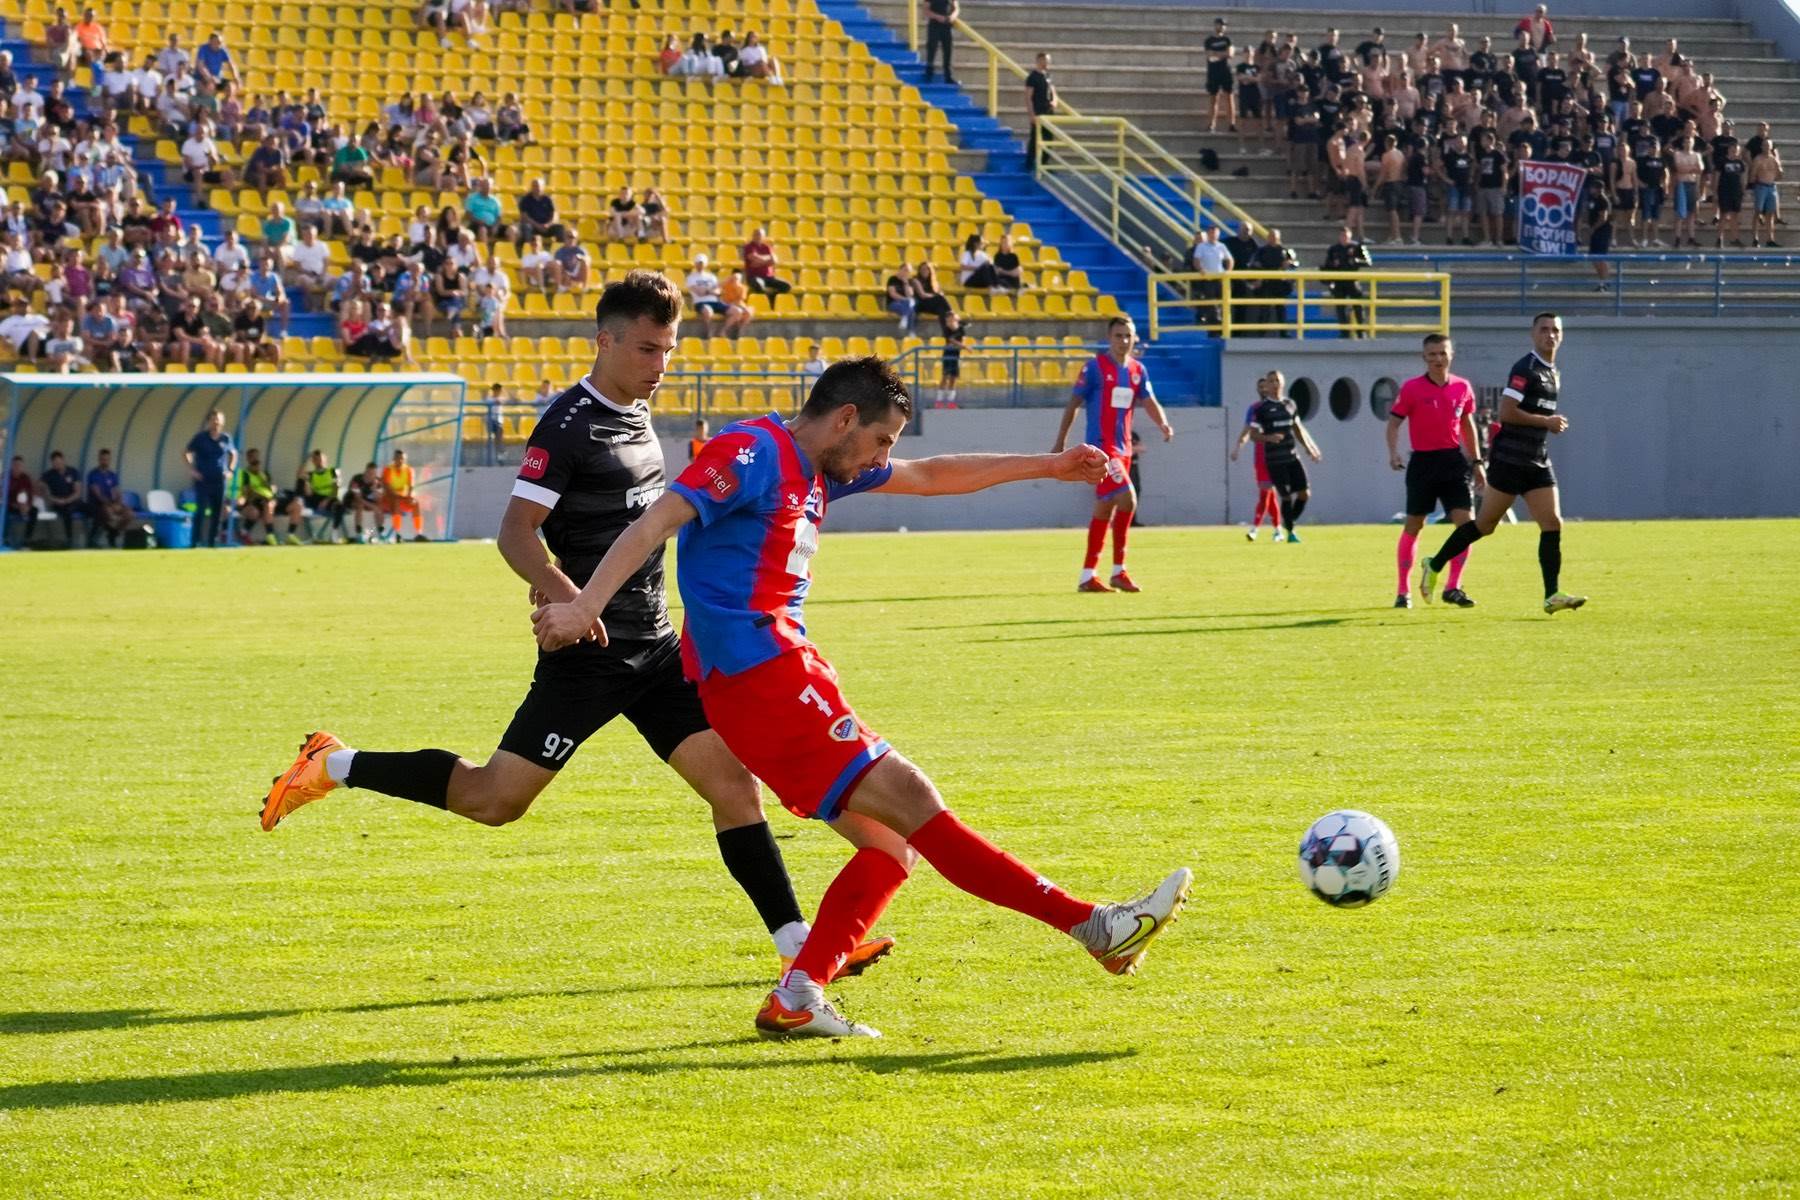  Posušje - Borac 0:2 video golovi highlights 